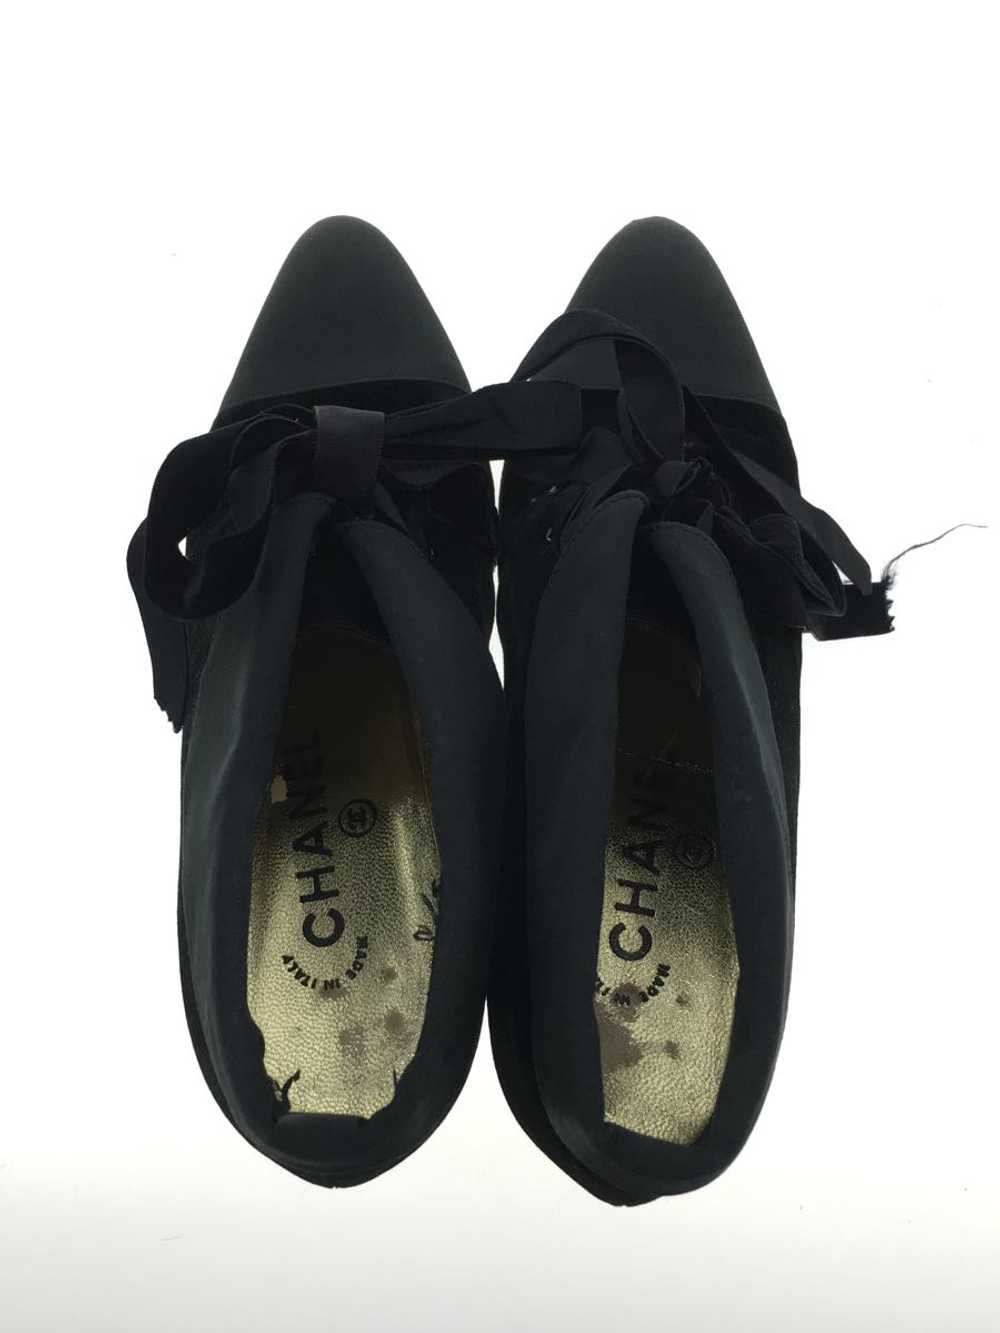 Chanel Pumps/36/Black/Suede Shoes Bbv86 - image 3